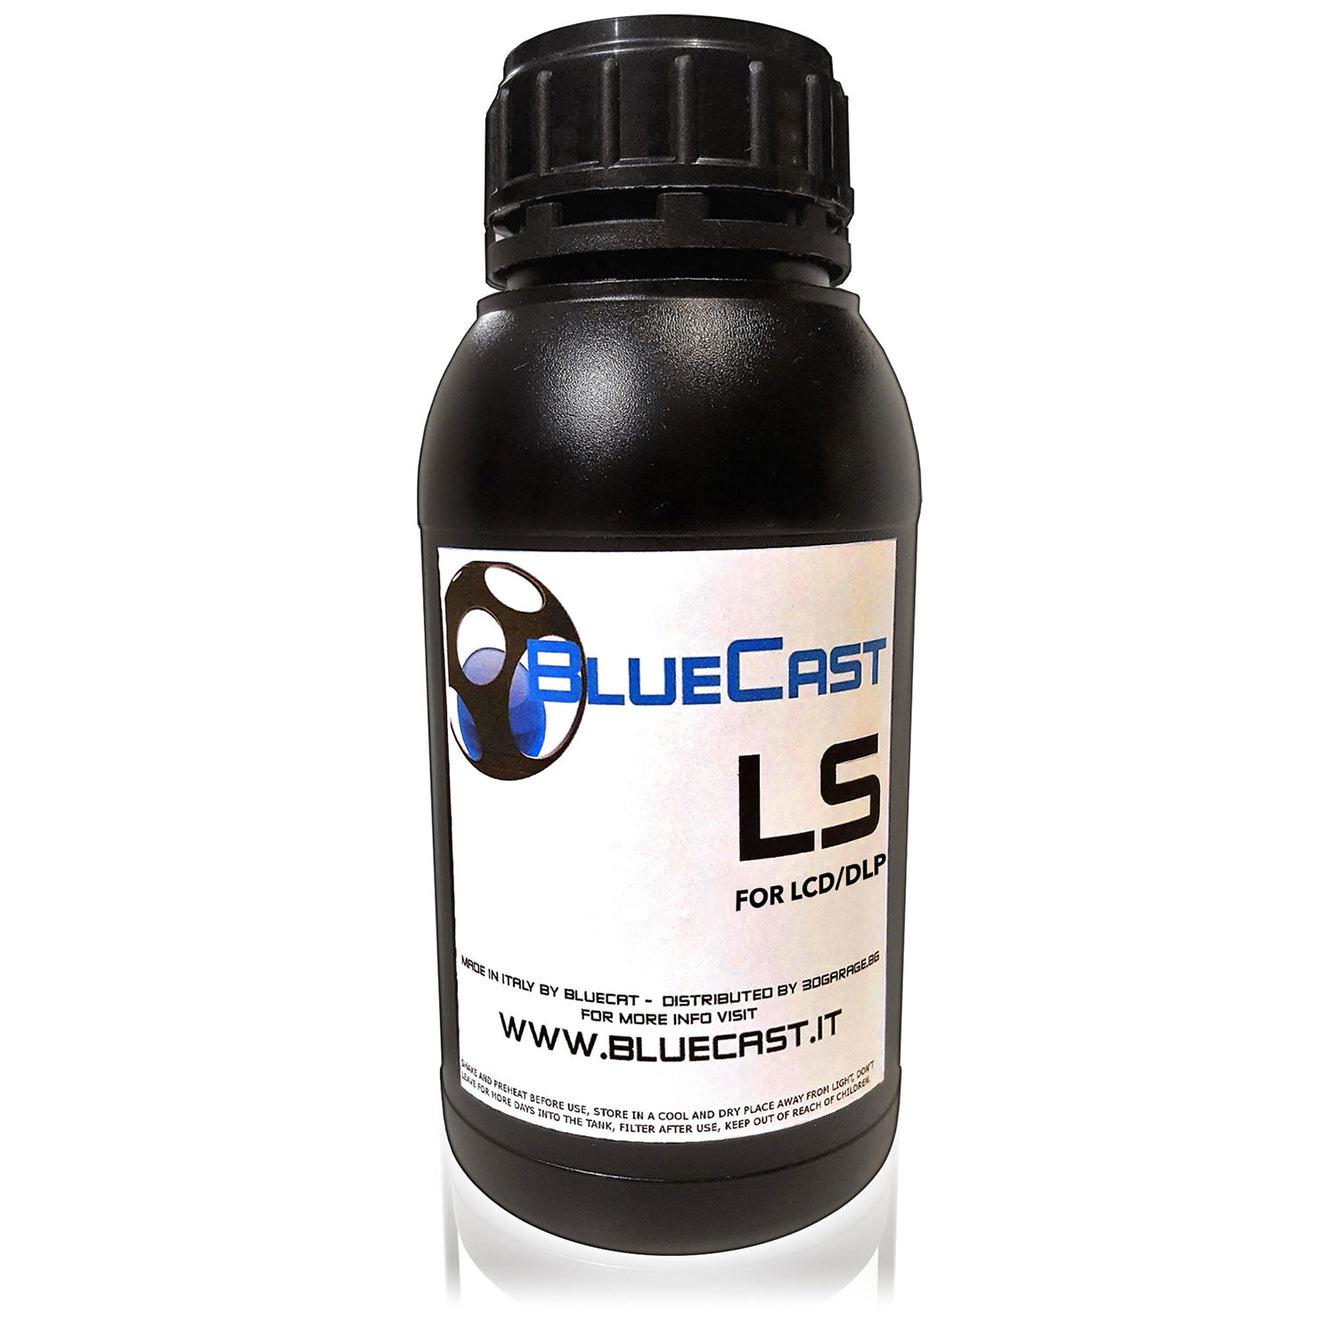 BlueCast LS Low Shrink LCD/DLP Castable Resin - 500g